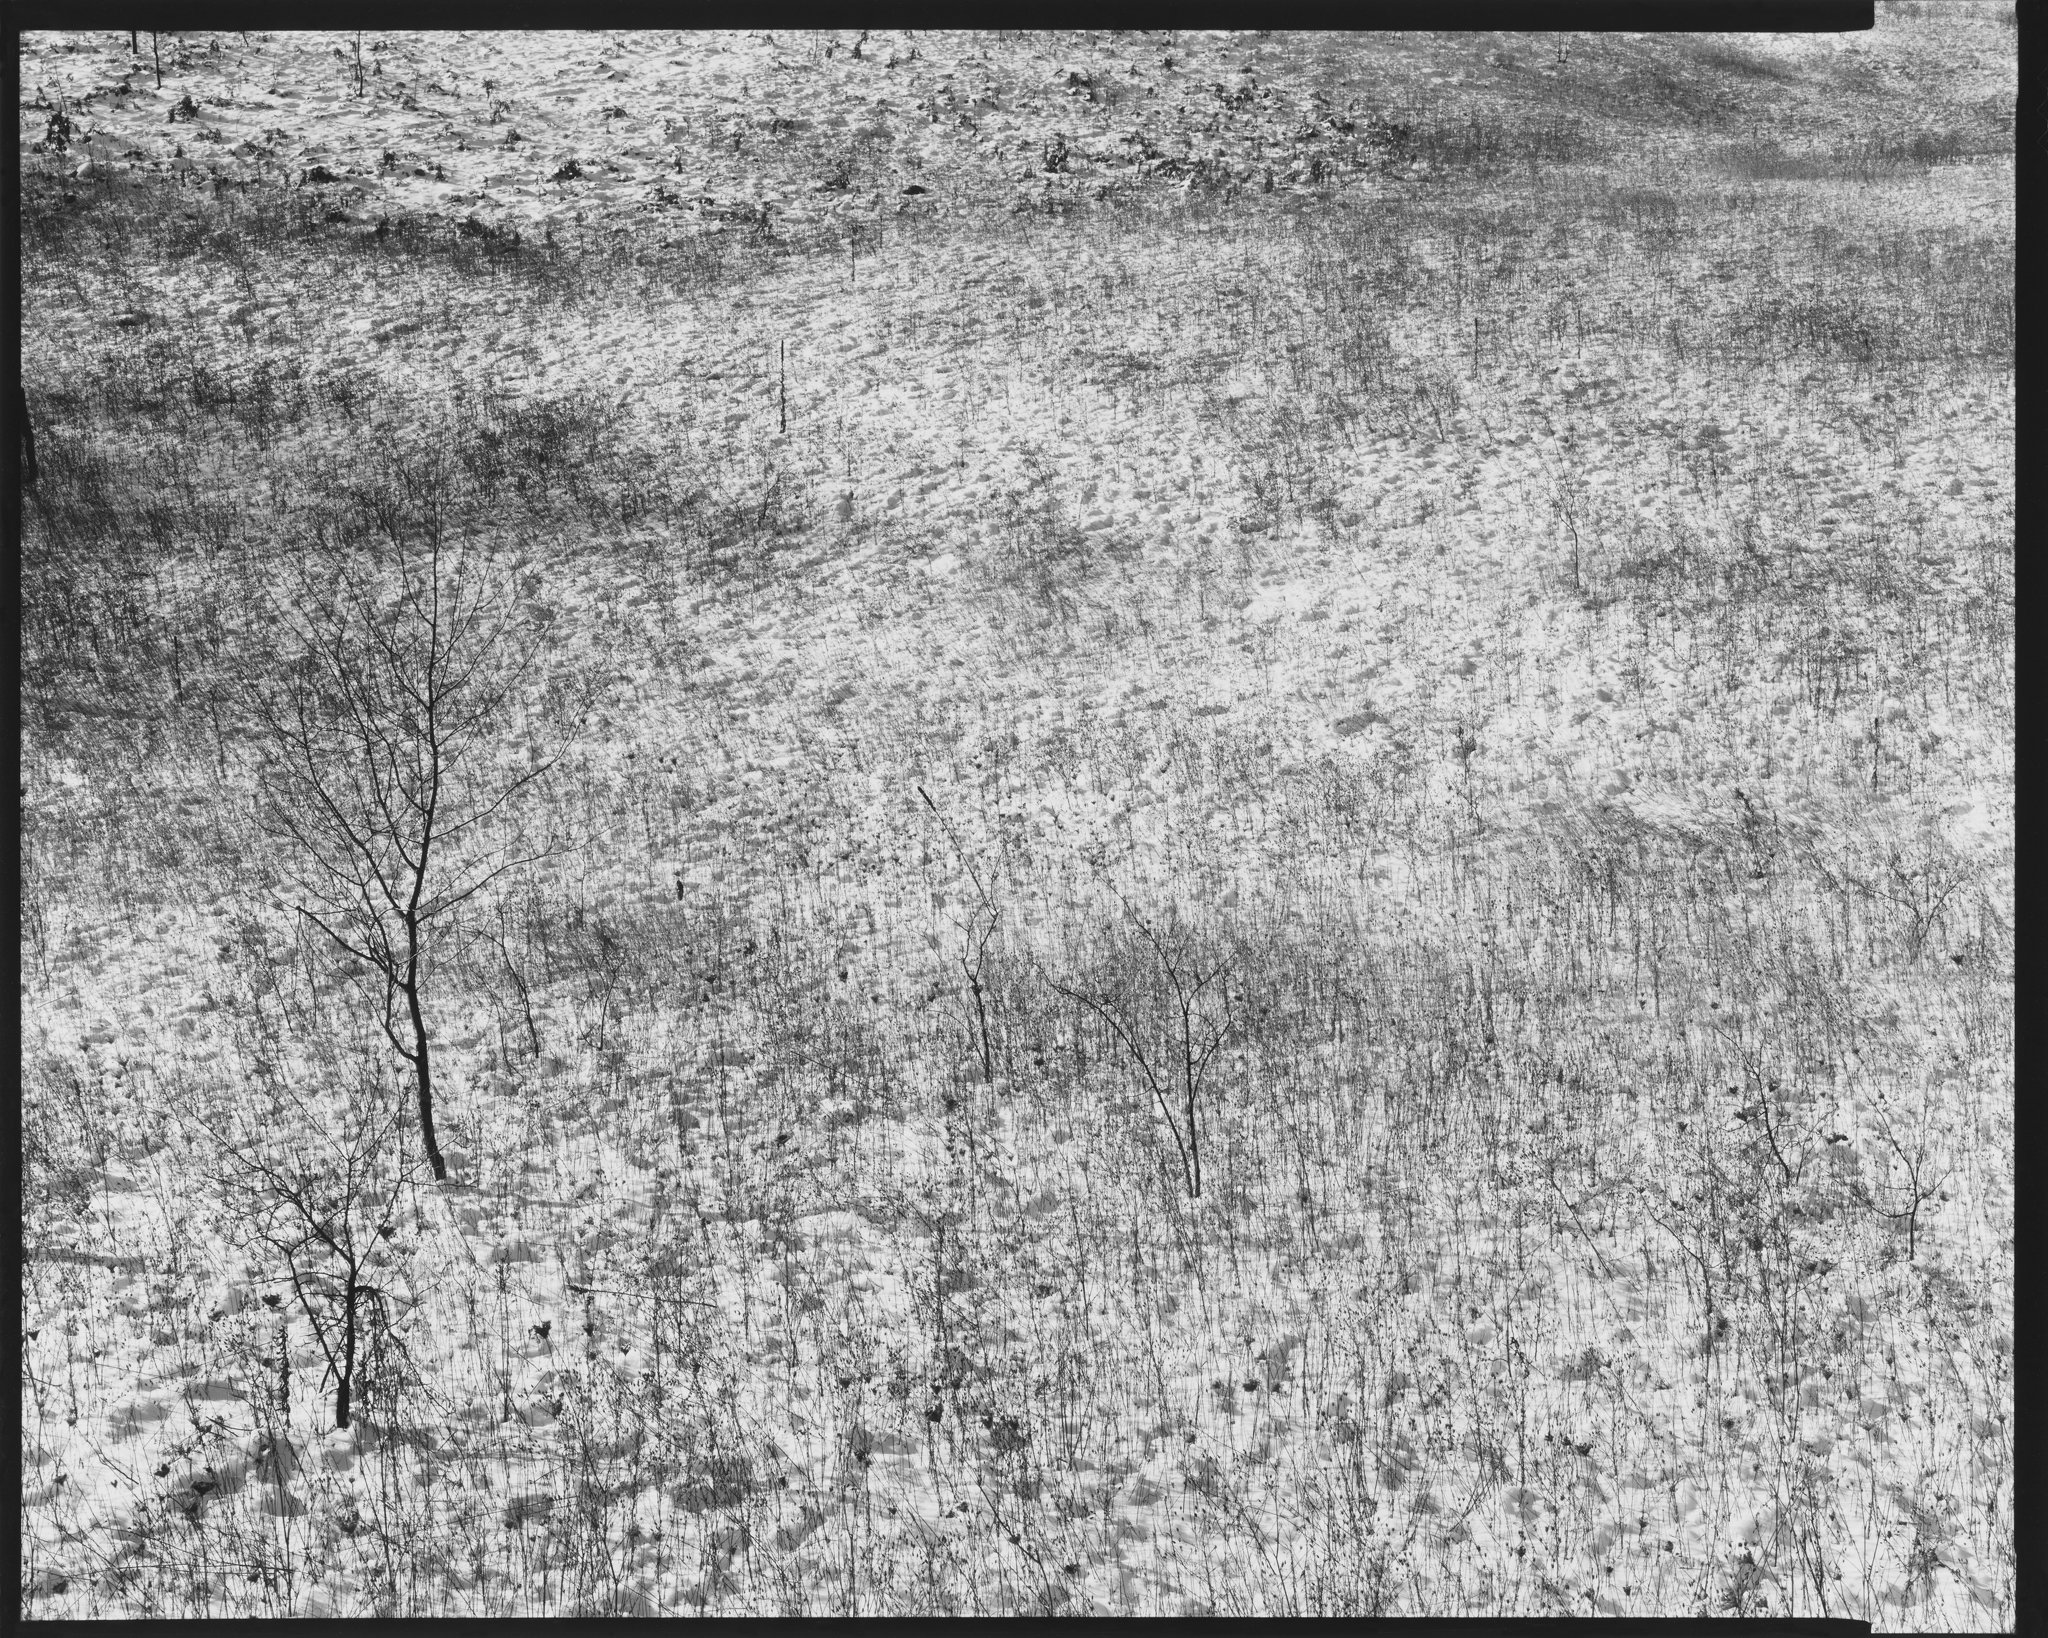 American Landscapes Portfolio_Snow Covered Field, Little Twin Lake, Michigan_1981 © Nick Merrick.jpg